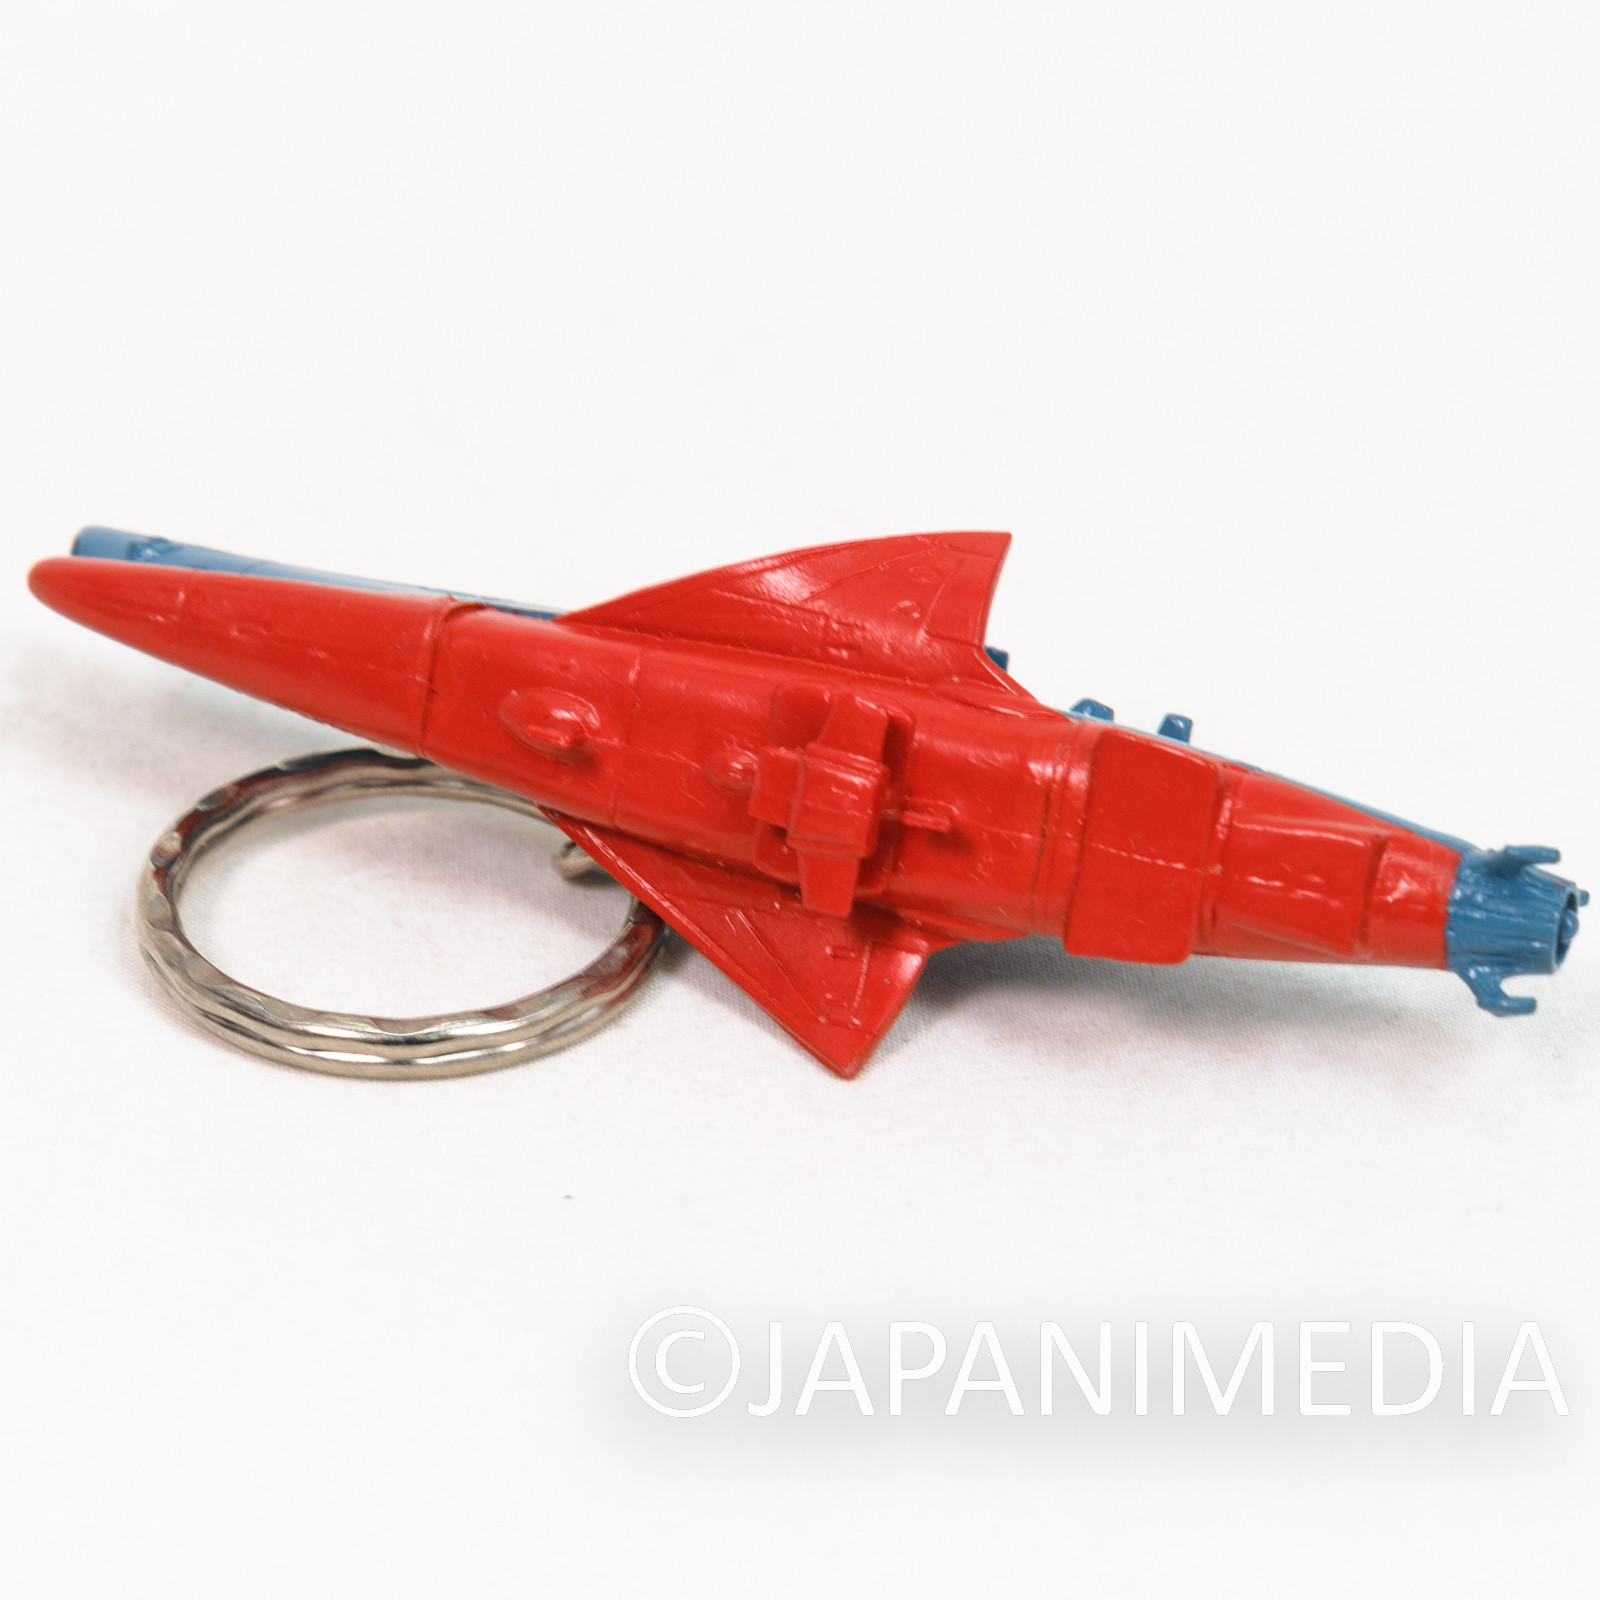 Space Battleship YAMATO Figure Keychain JAPAN ANIME